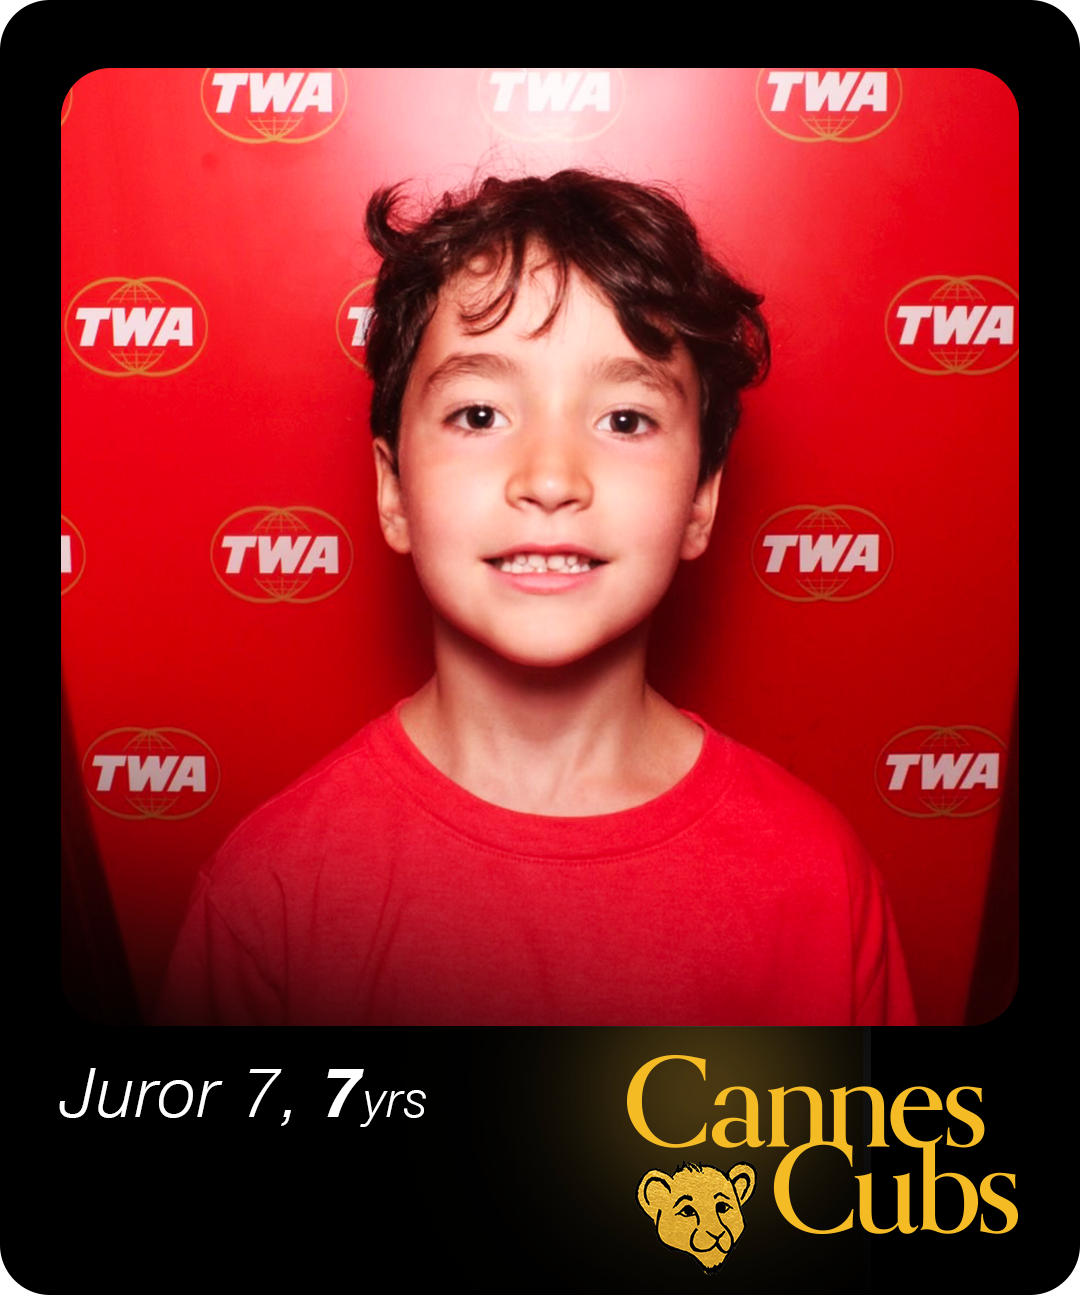 Cannes Cubs juror 7.png